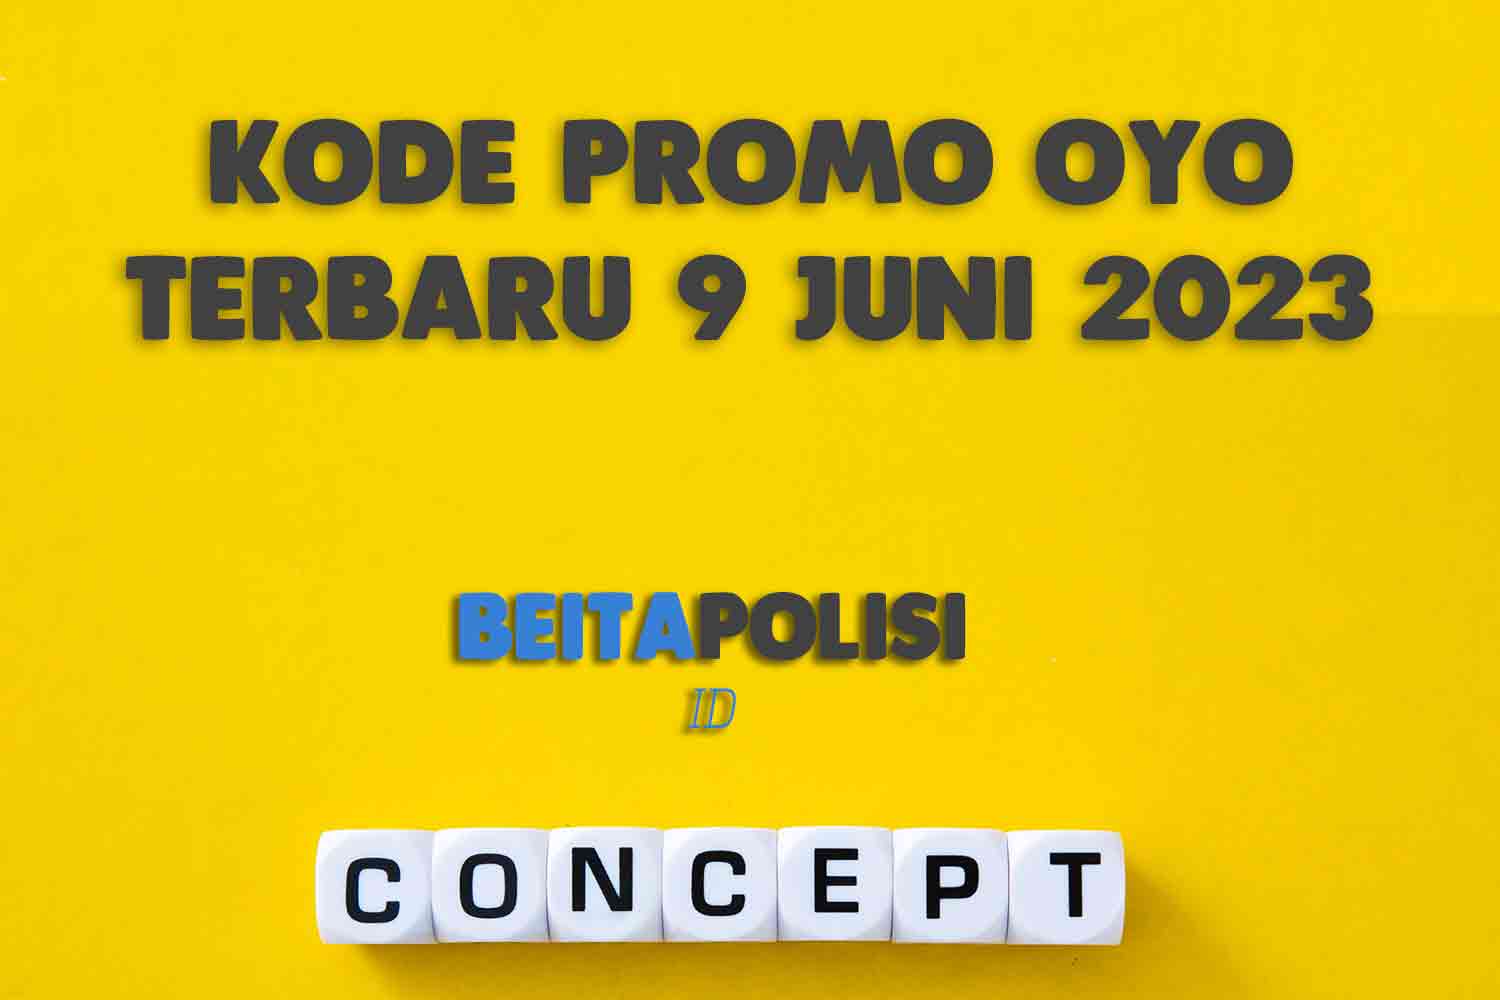 Kode Promo Oyo Terbaru 9 Juni 2023